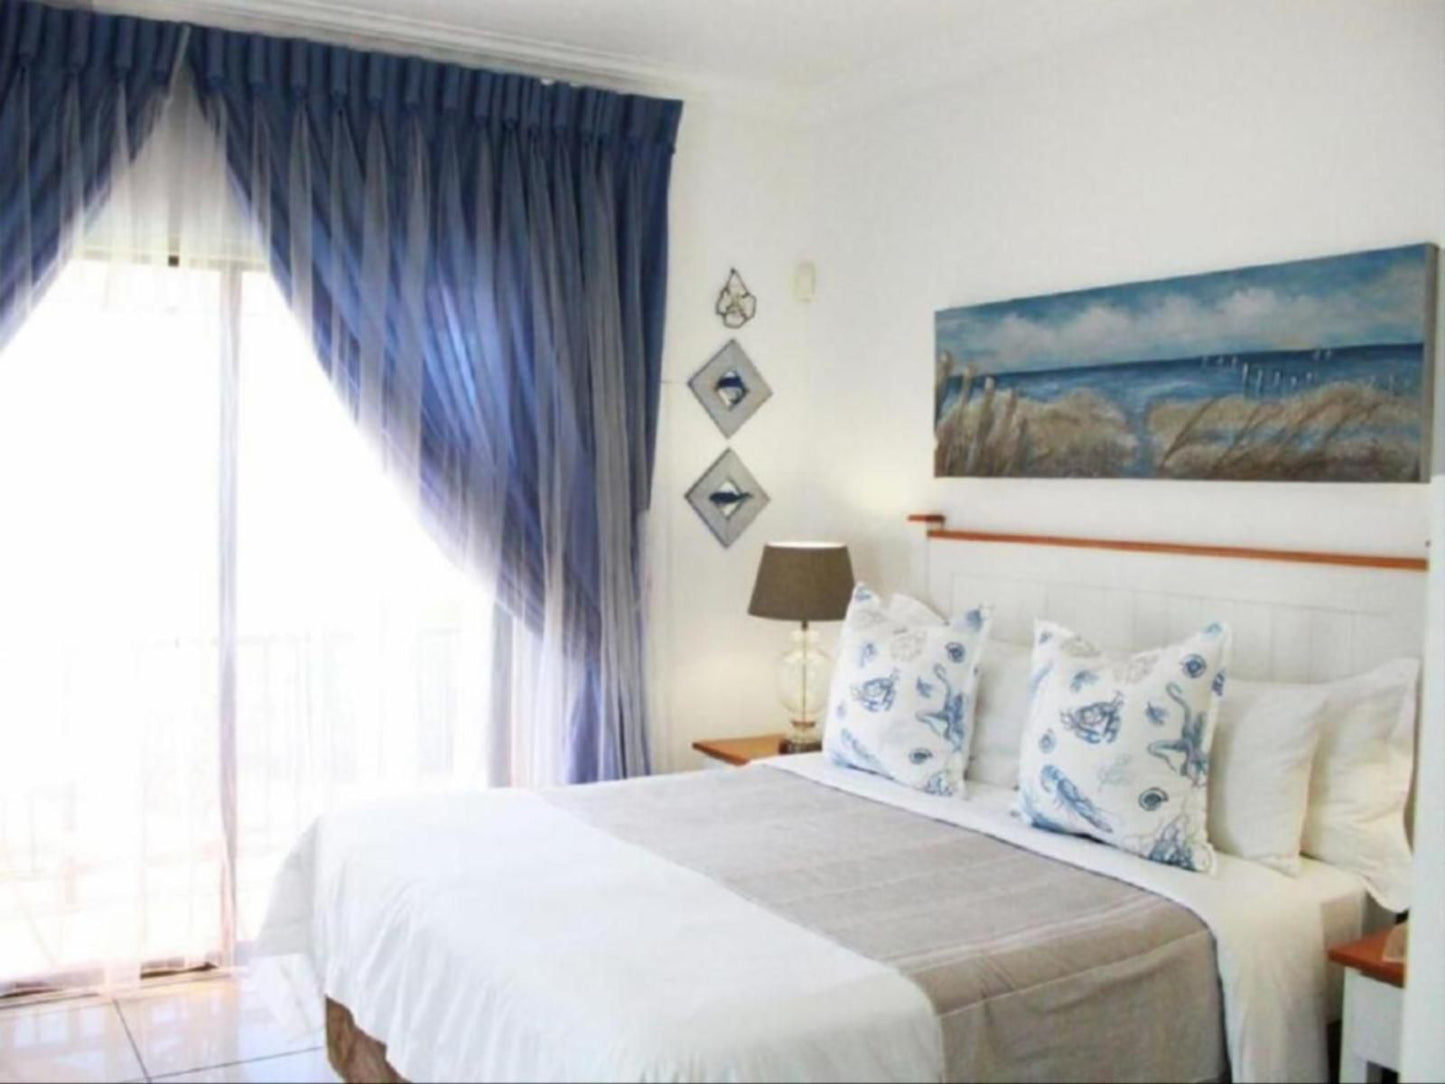 At Dom S Bandb Zimbali Coastal Estate Ballito Kwazulu Natal South Africa Bedroom